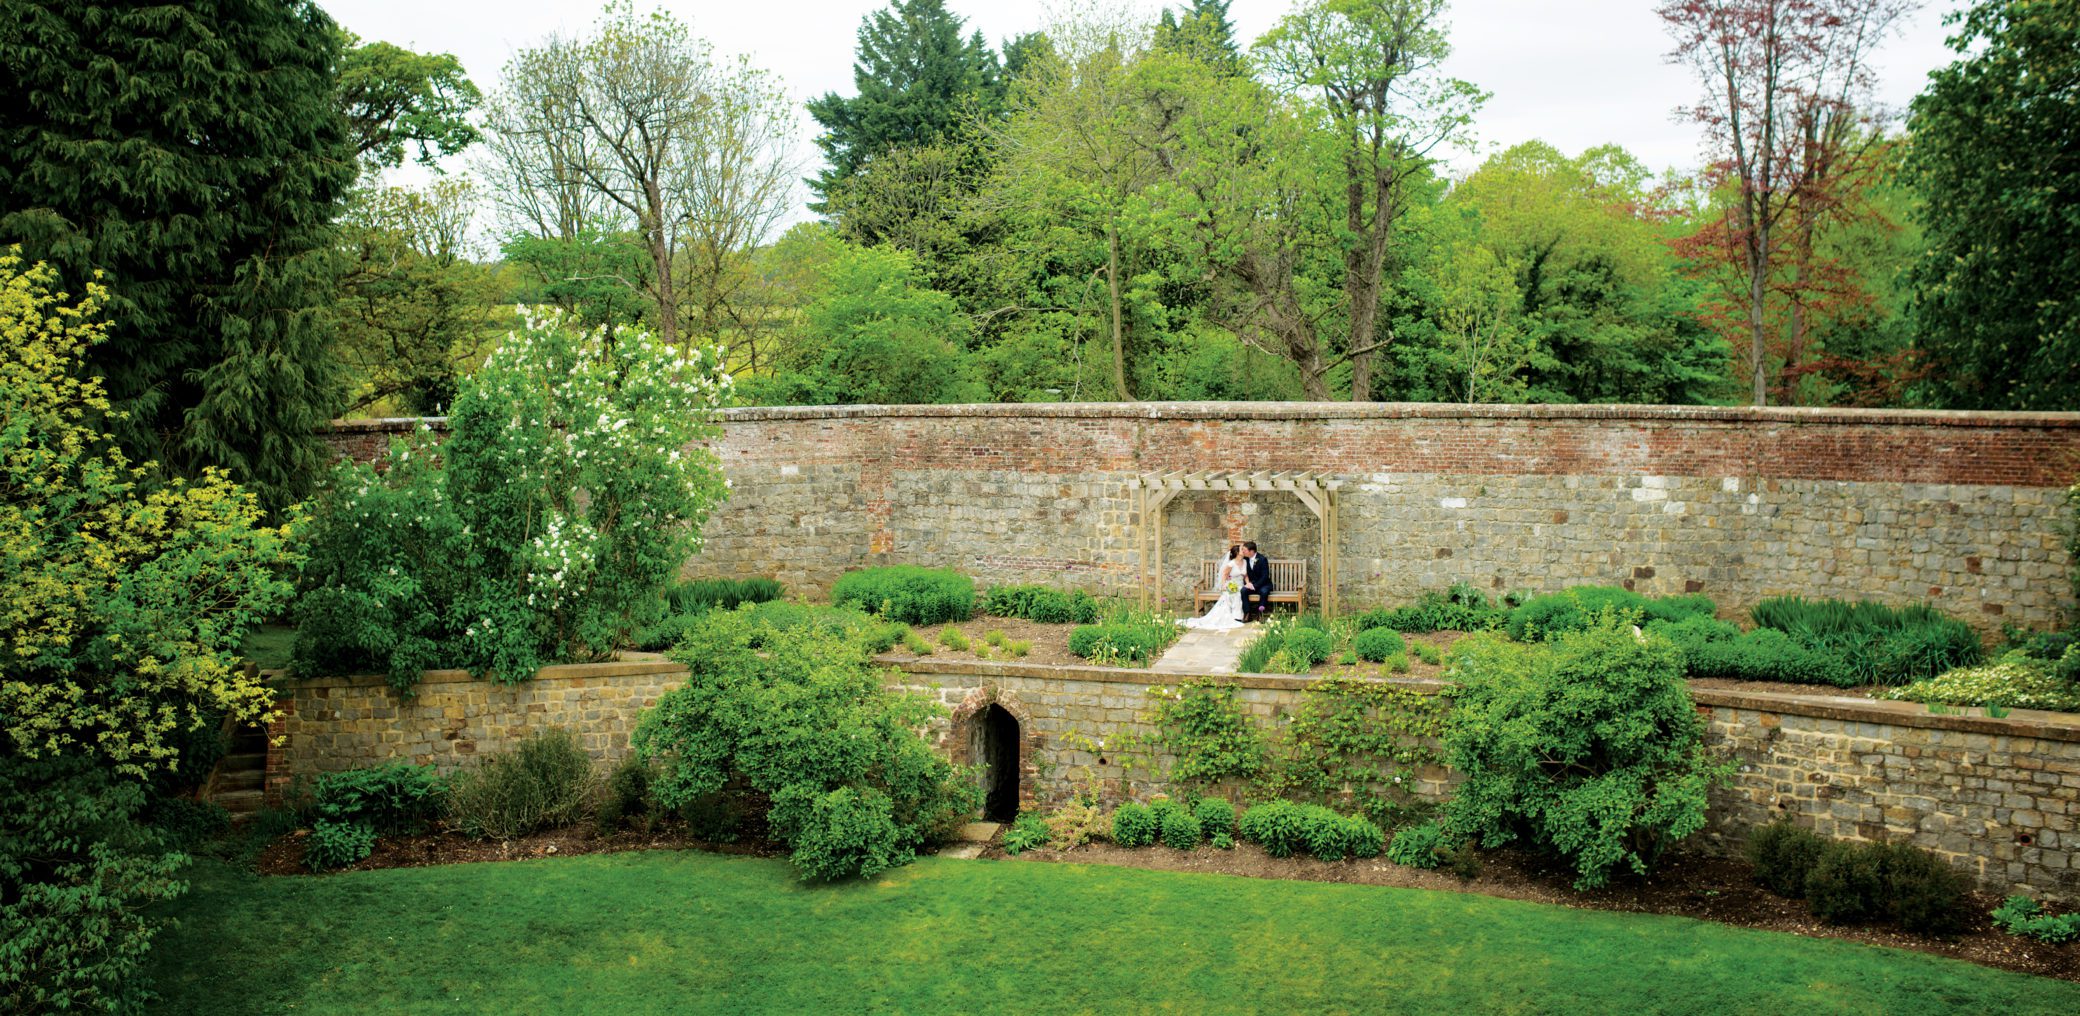 Pretty gardens at Farnham Castle in Surrey